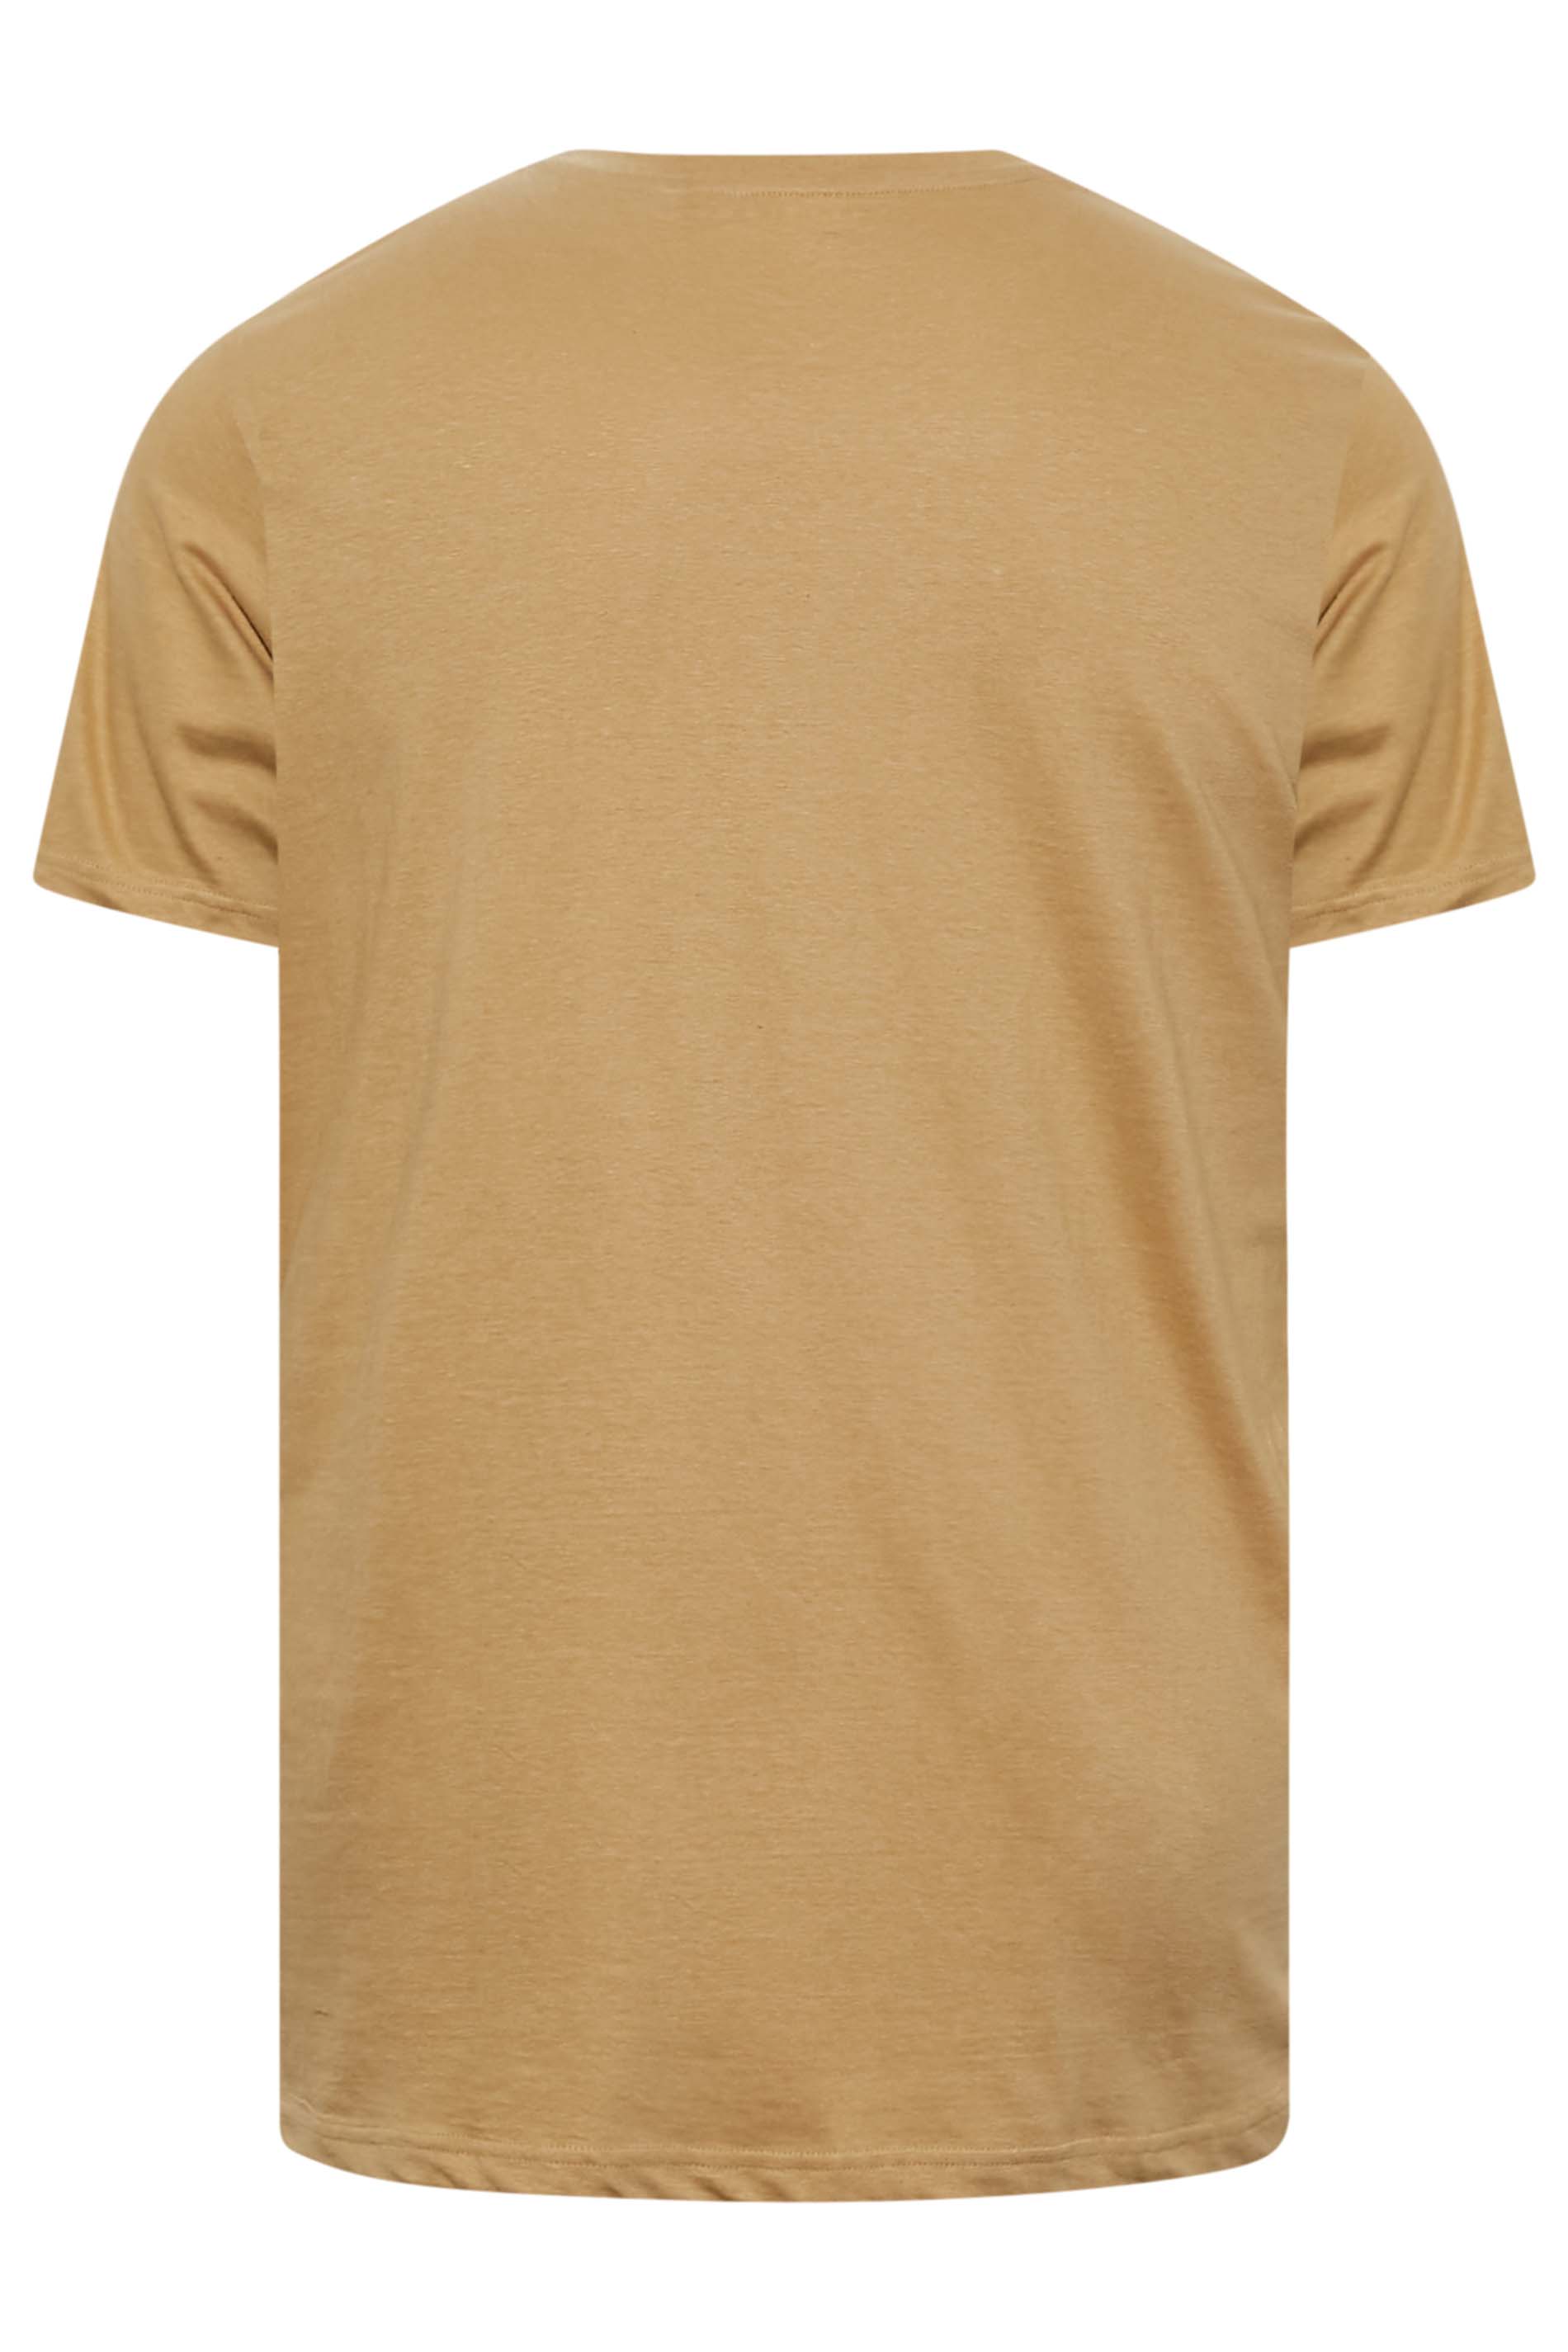 BadRhino Big & Tall Beige Brown Core T-Shirt | BadRhino